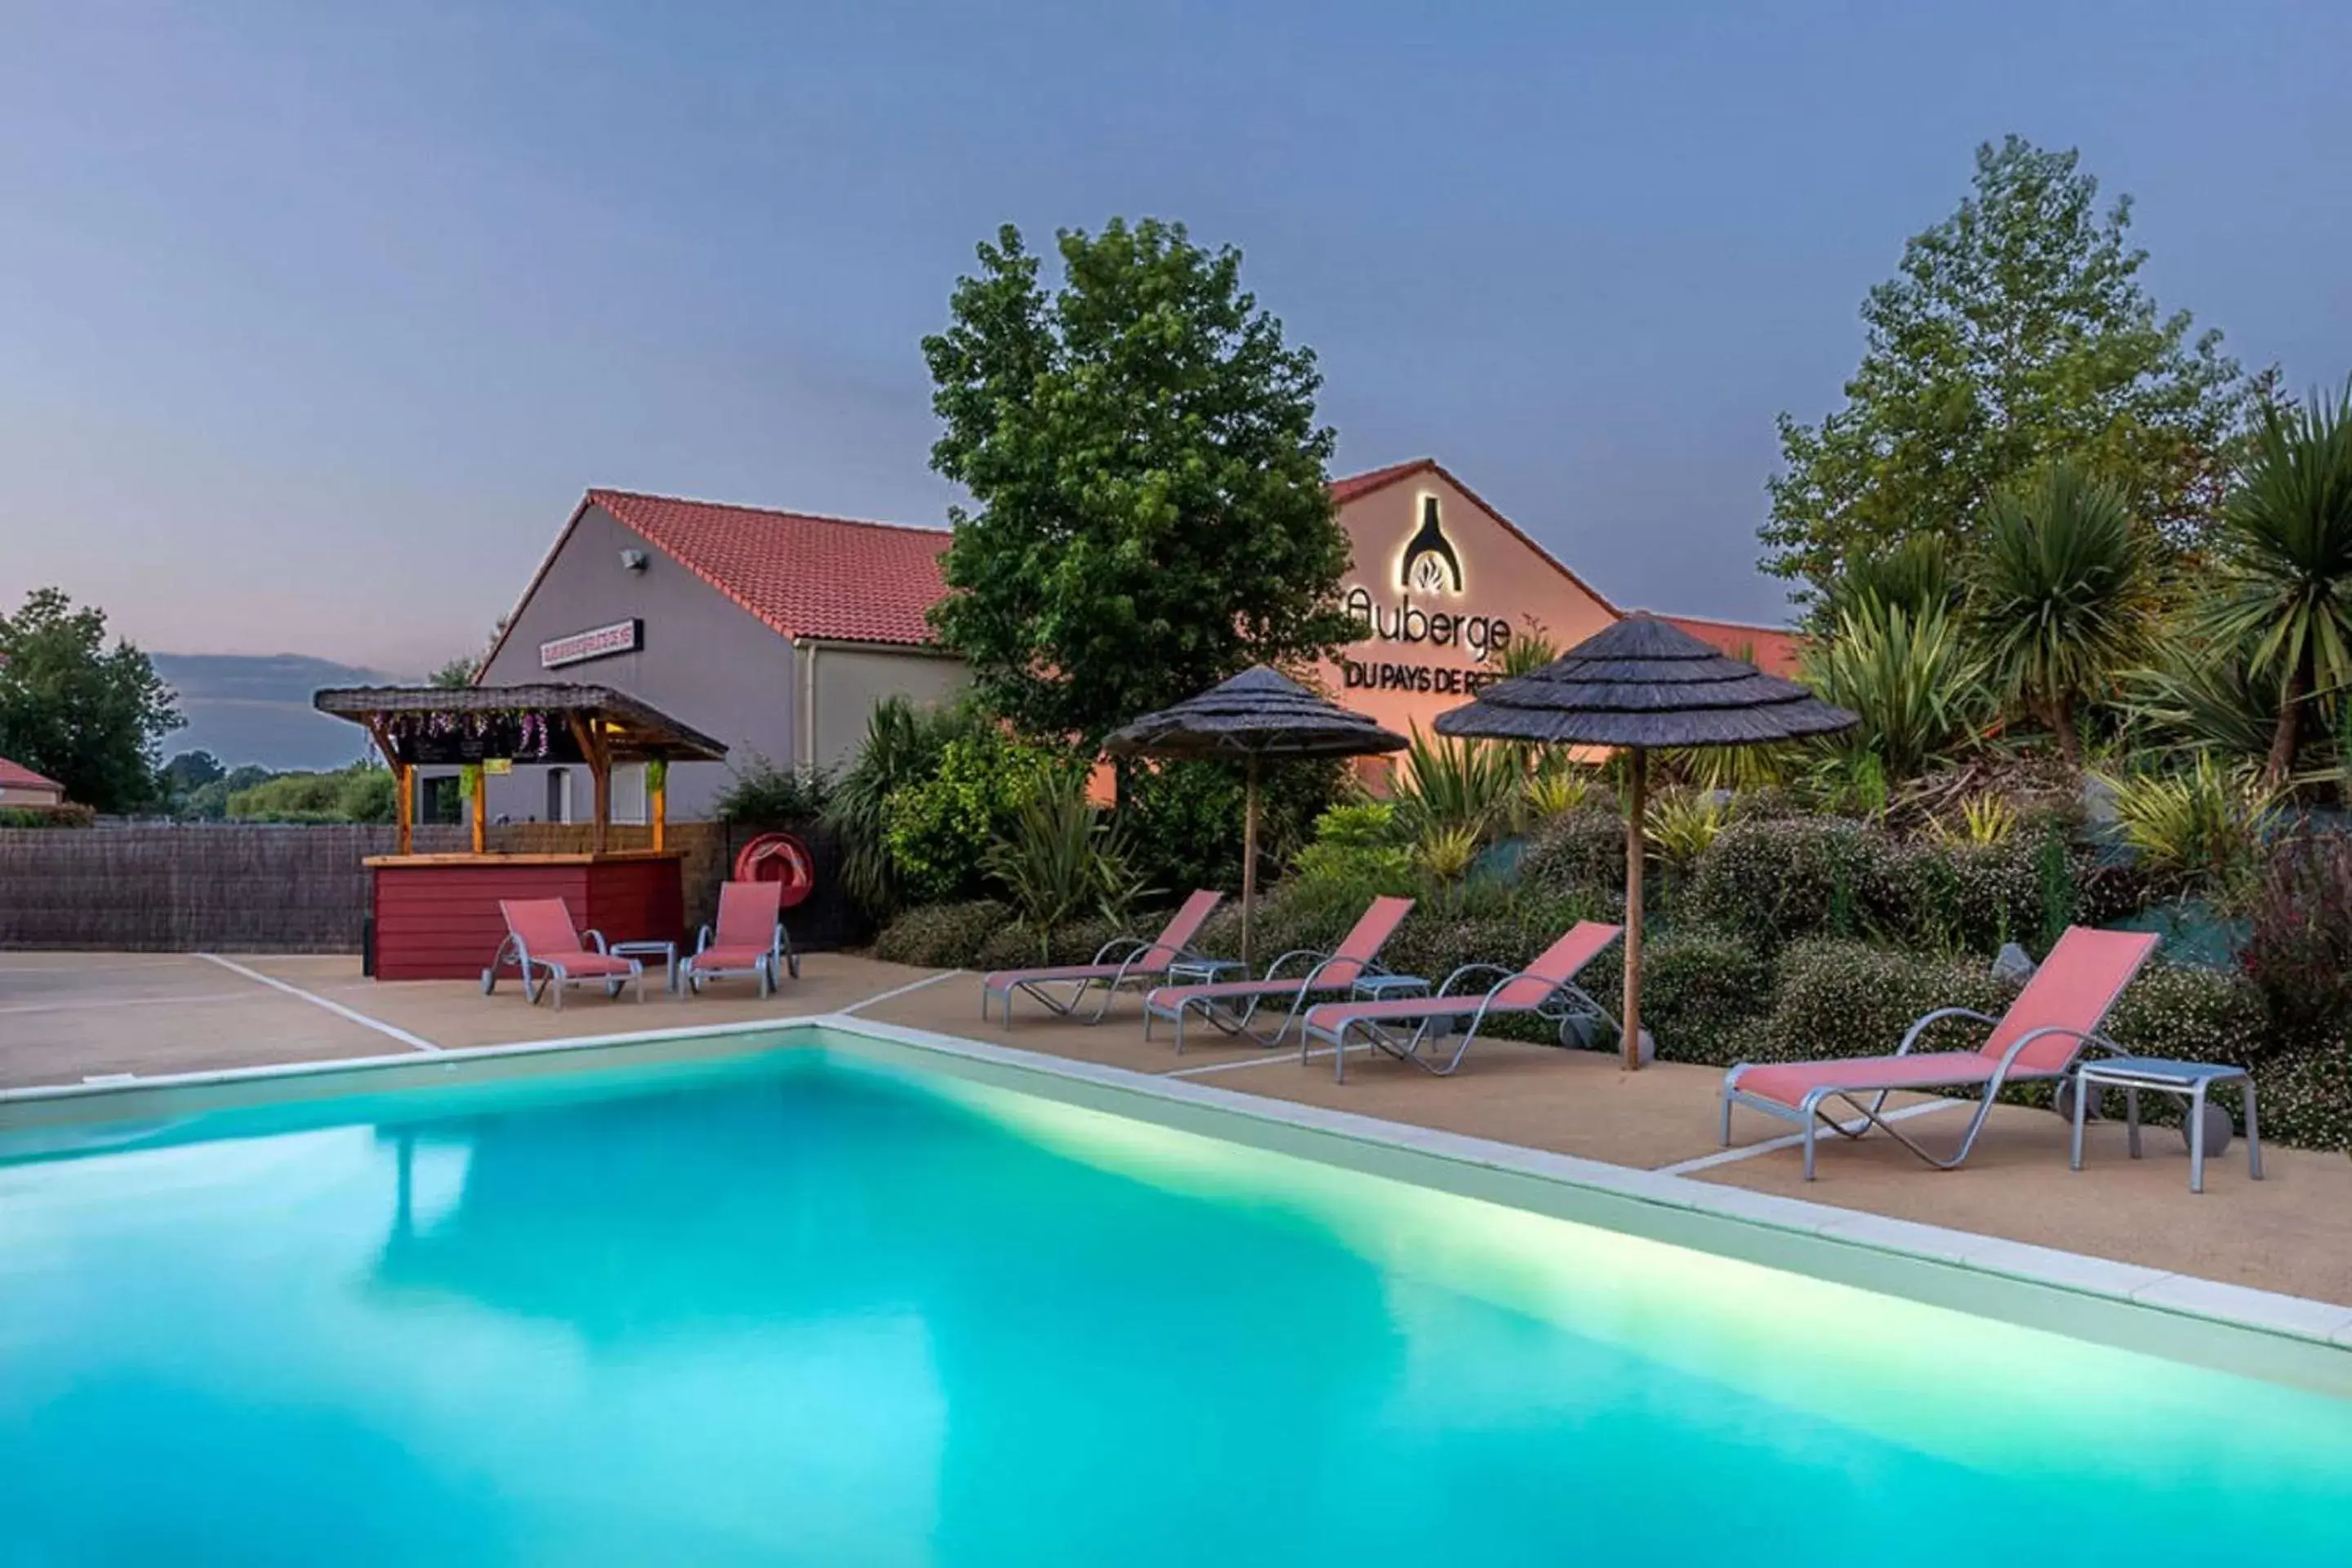 On site, Swimming Pool in Best Western Hotel Nuit De Retz Nantes Sud